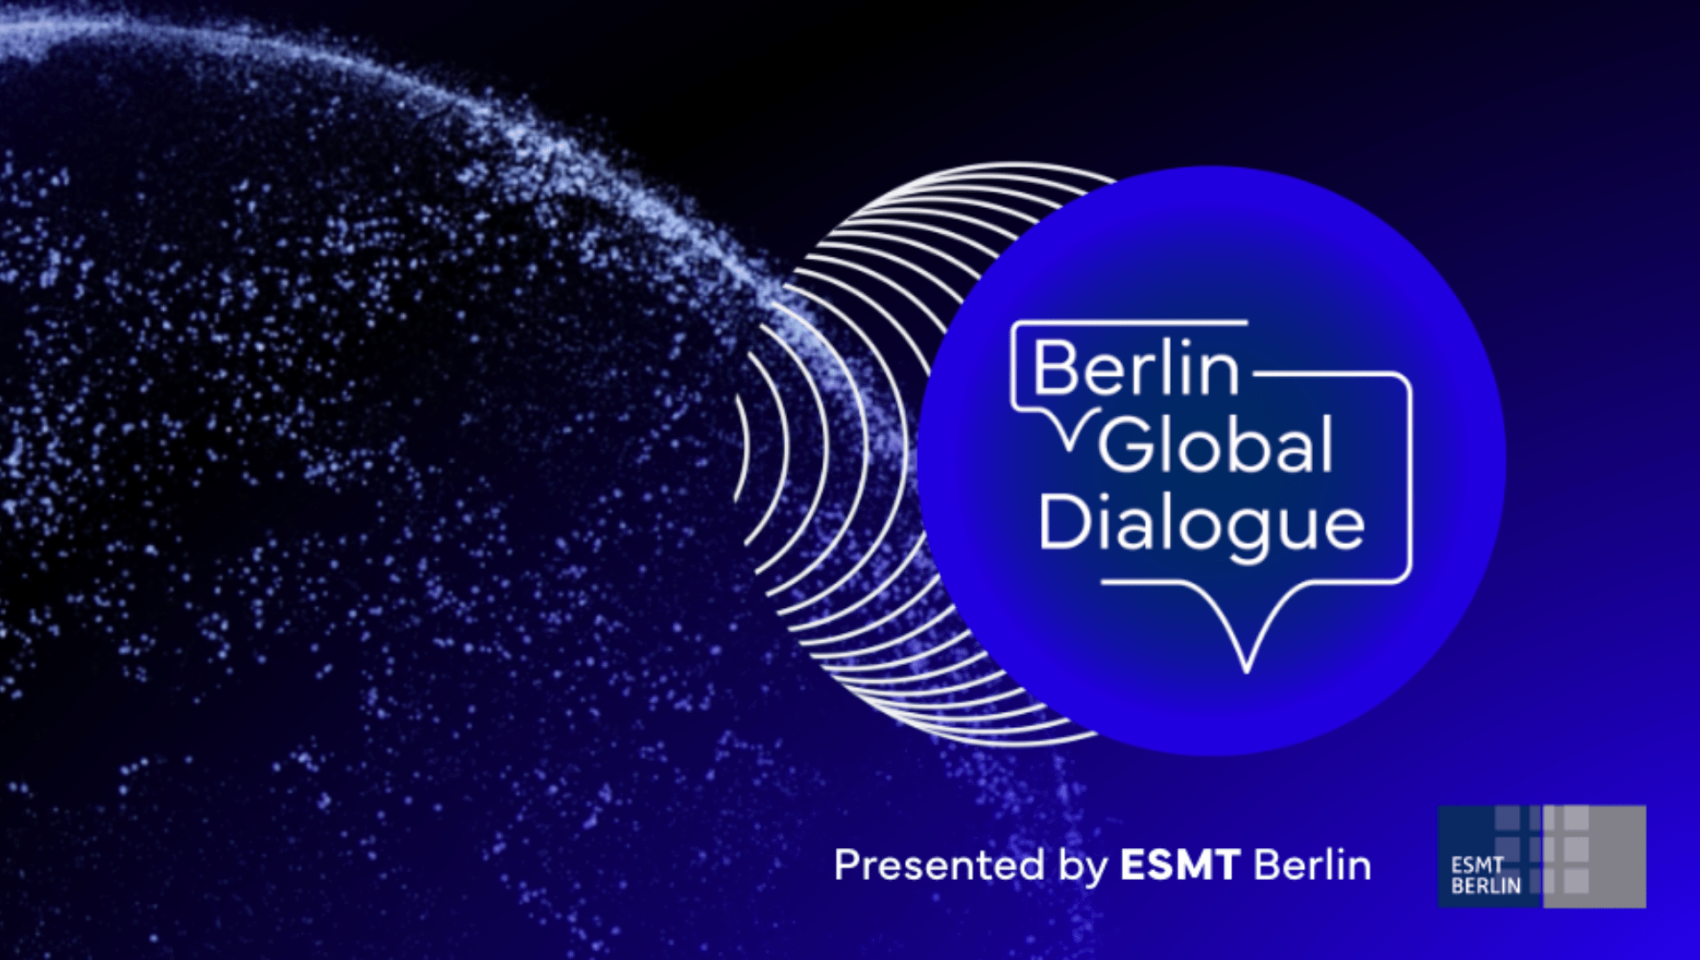 Berlin Global Dialogue at ESMT Berlin